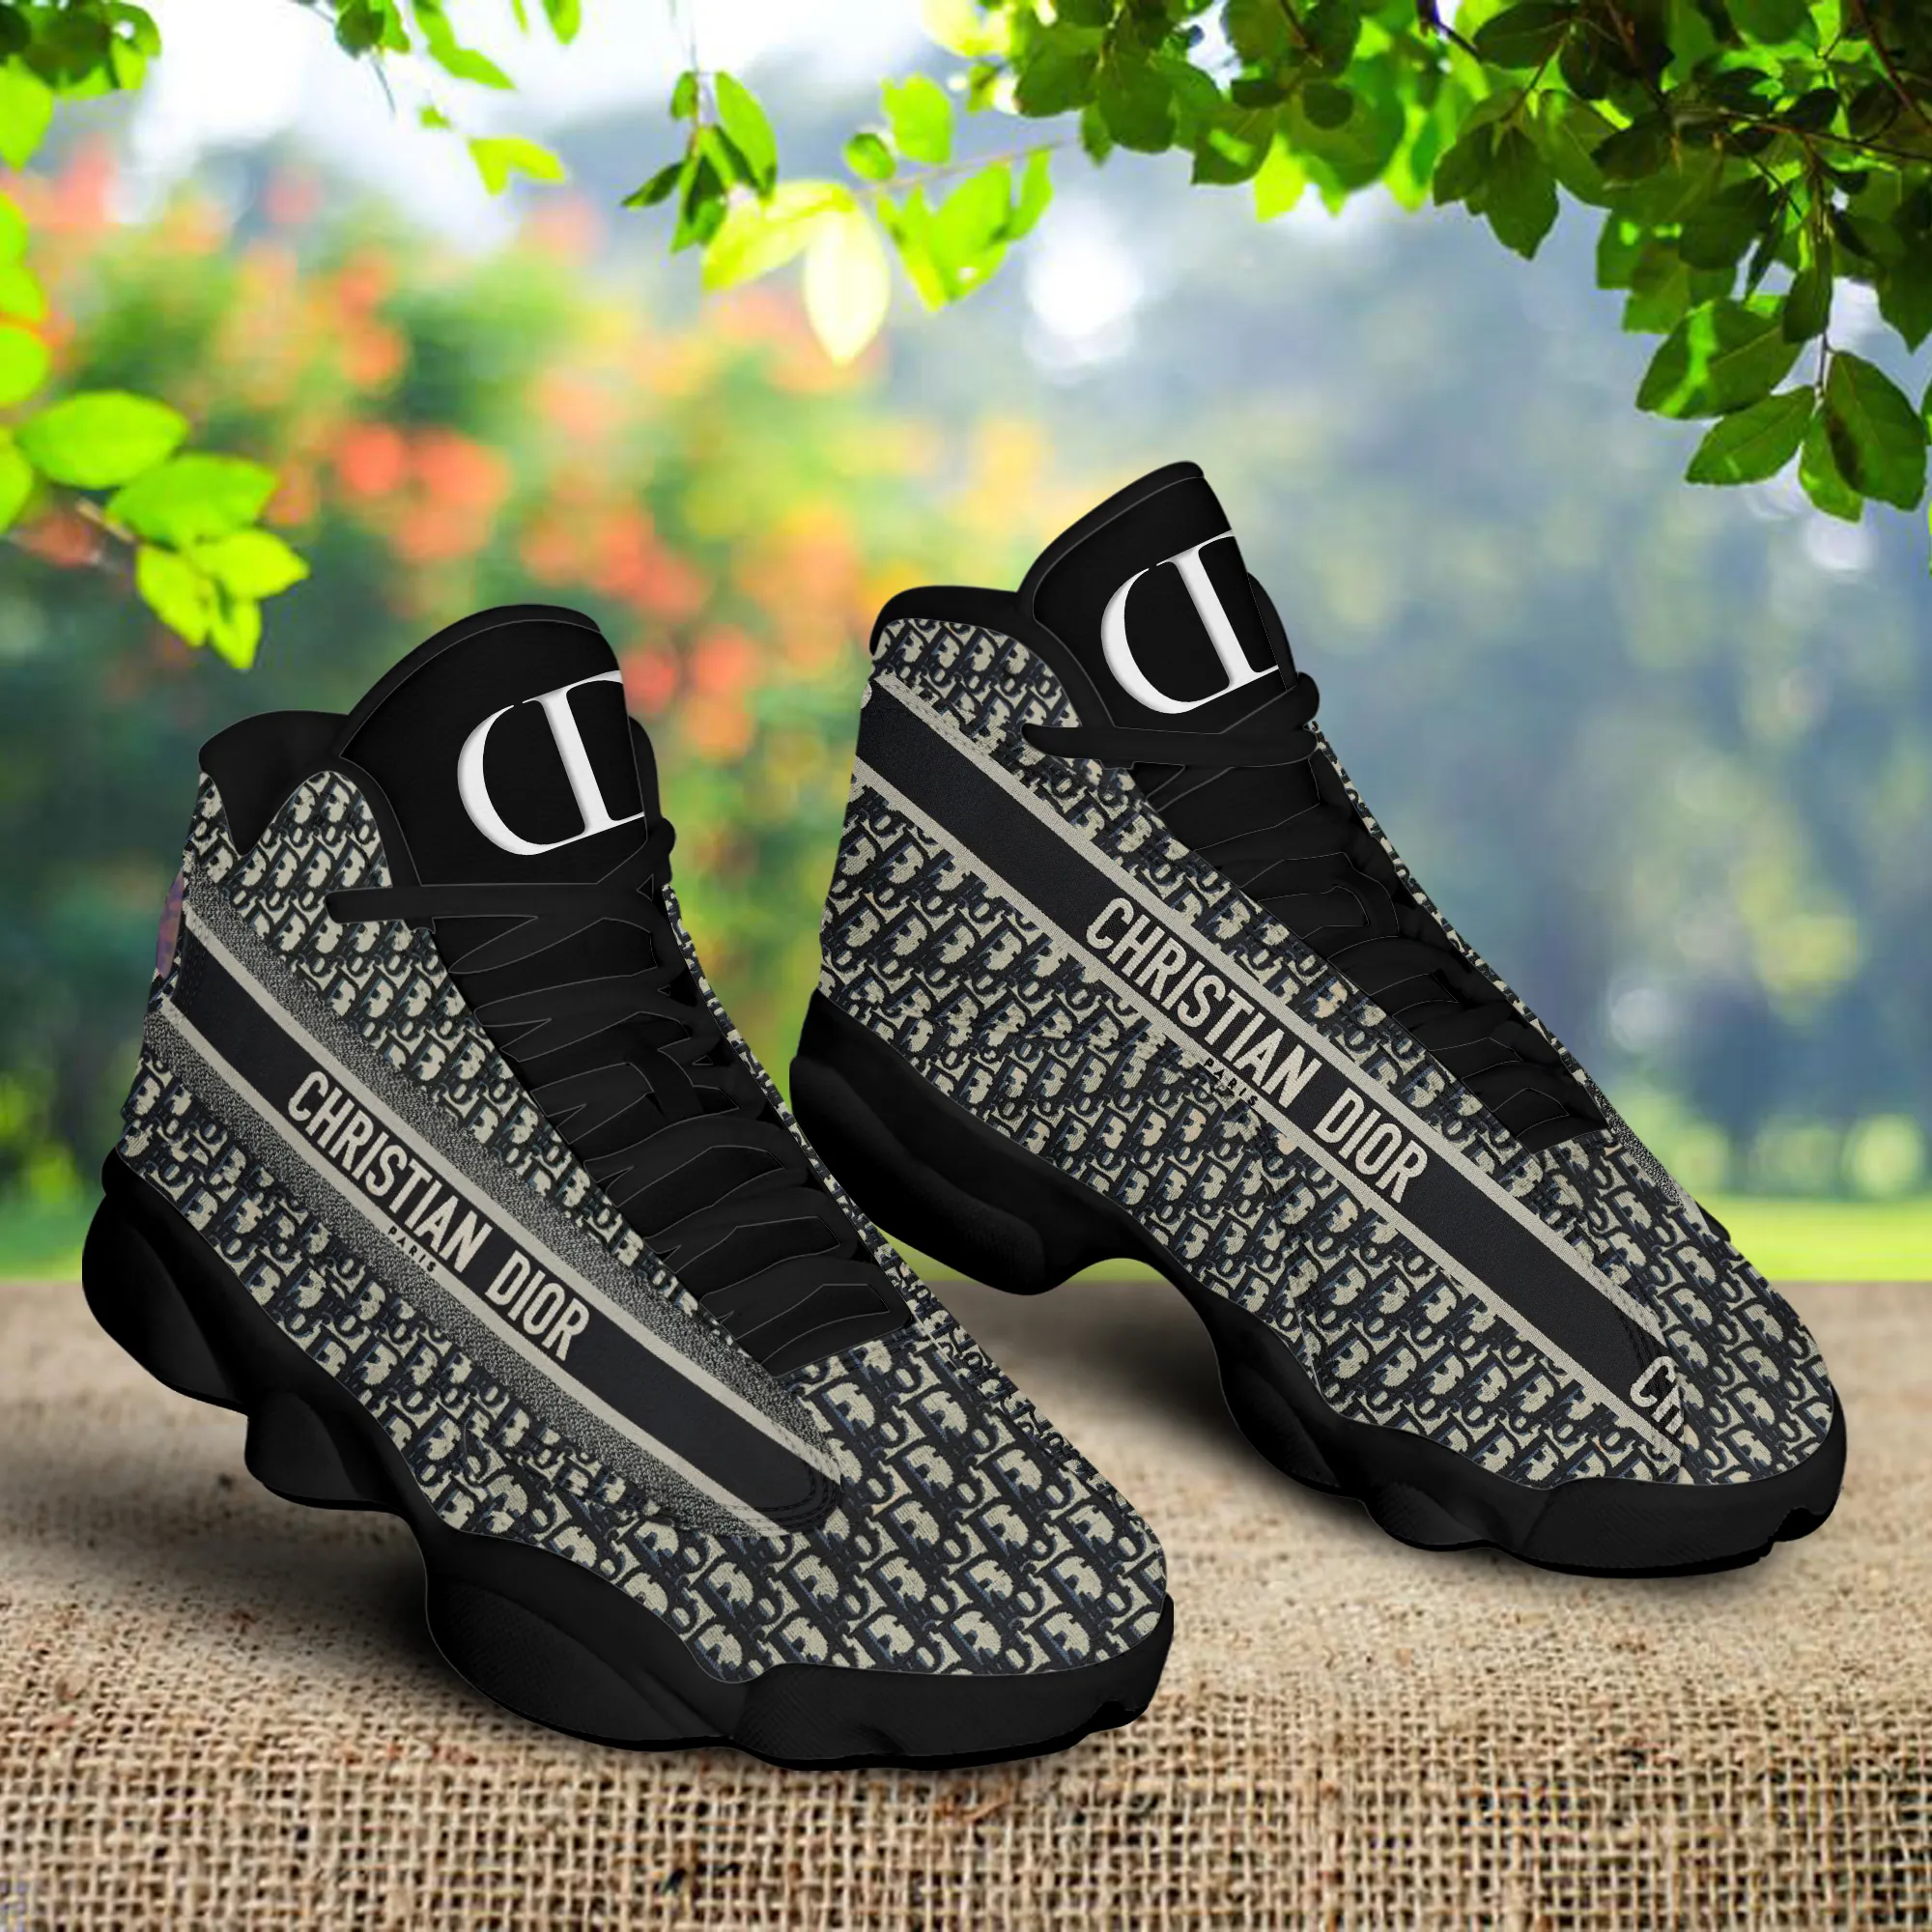 Christian Dior Air Jordan 13 Sneakers Shoes Luxury Trending Fashion